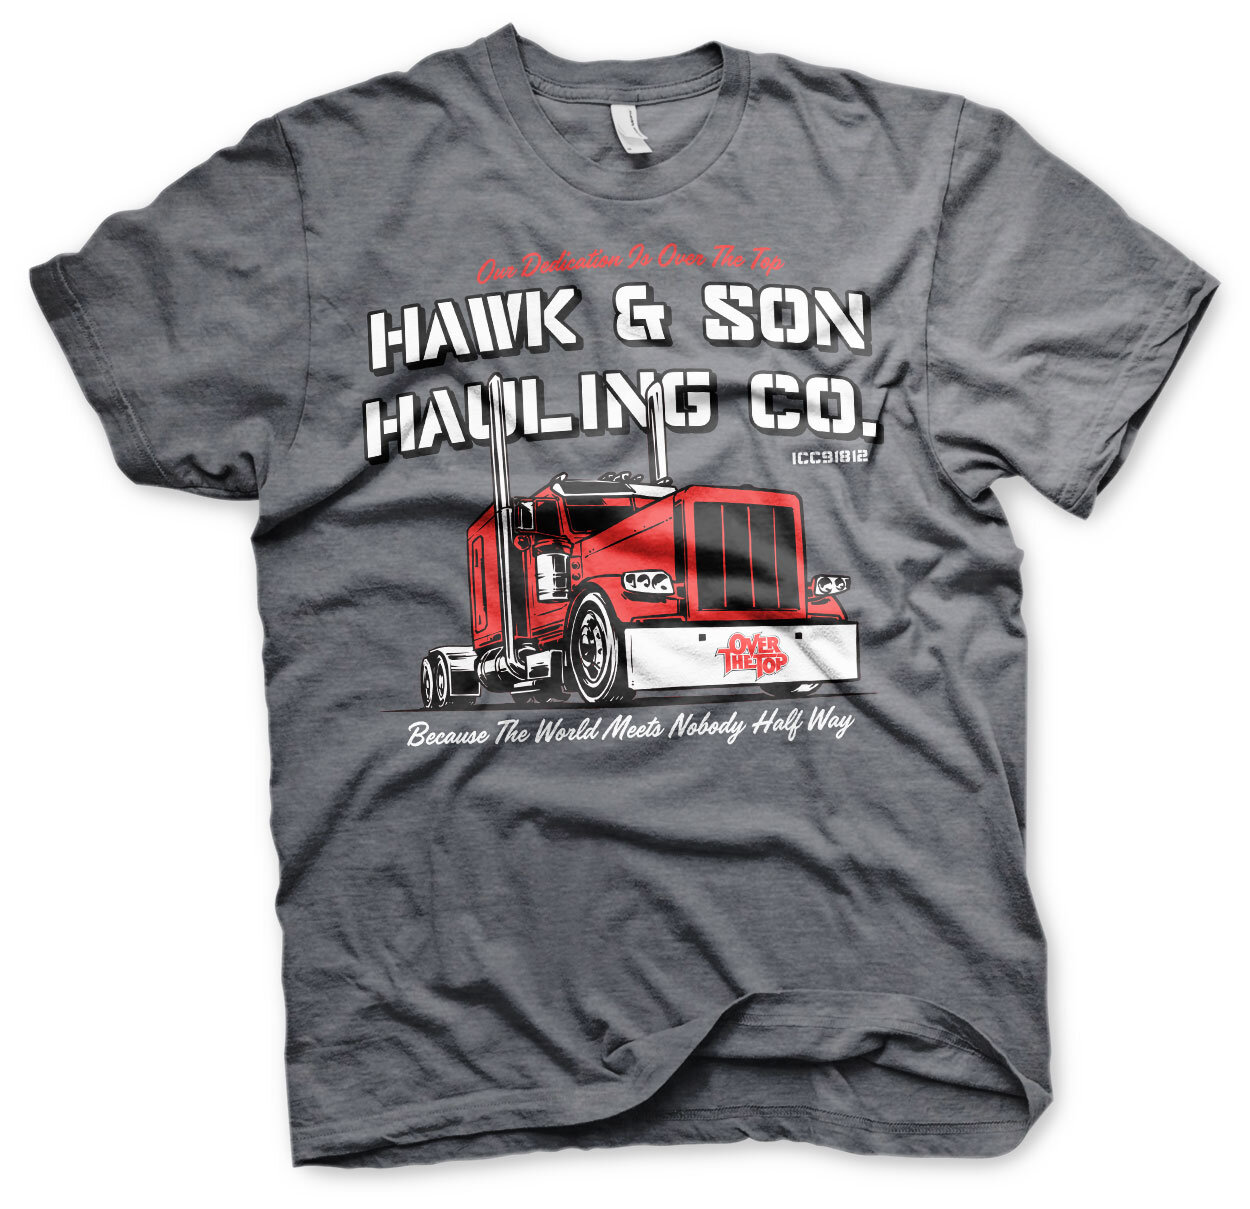 Hawk & Son Hauling Co T-Shirt